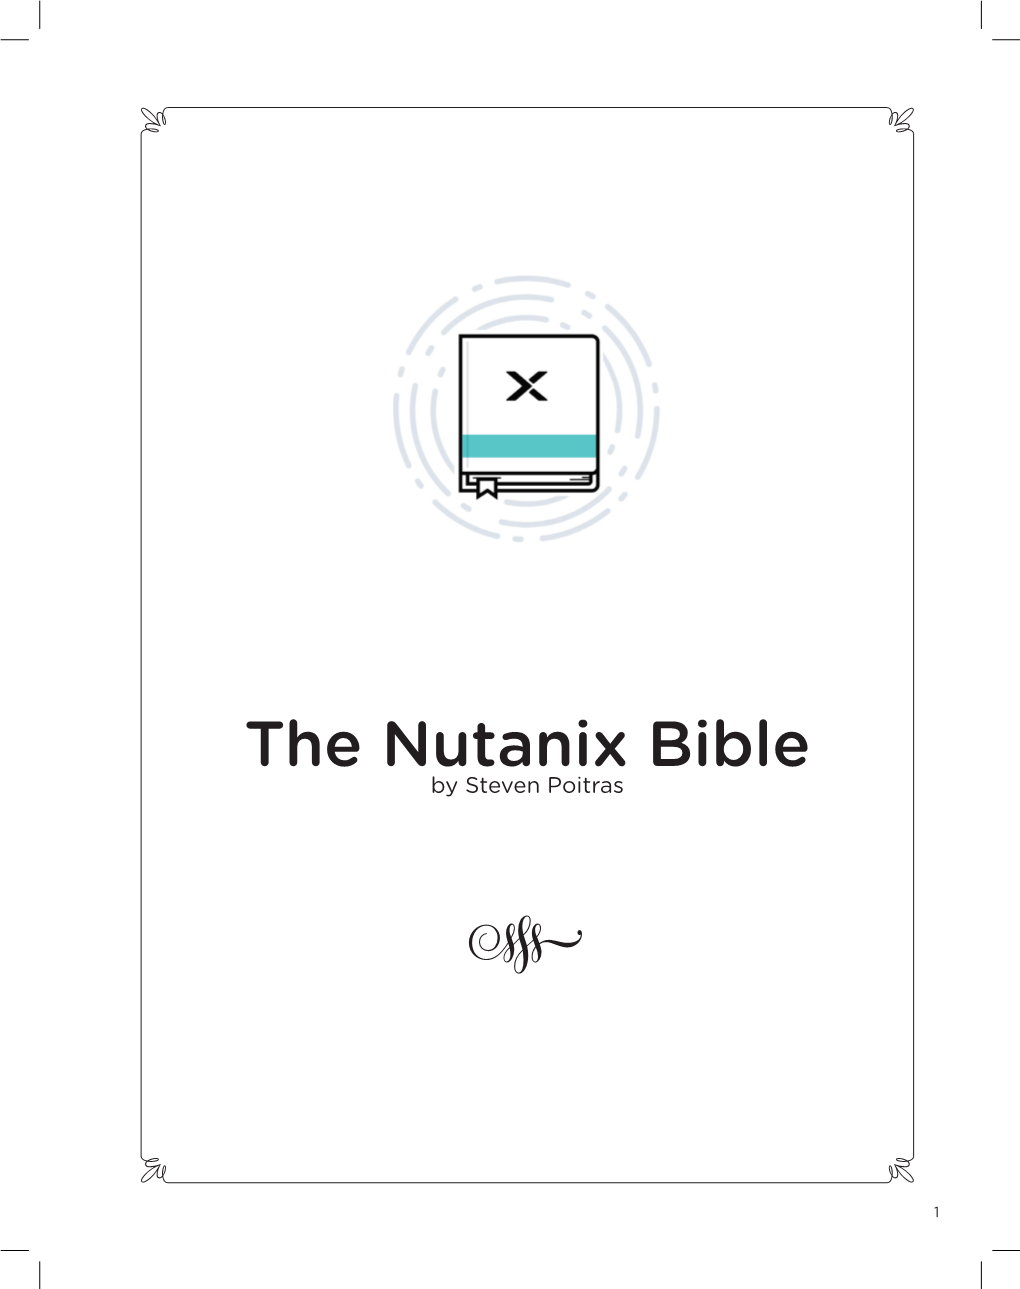 The Nutanix Bible by Steven Poitras